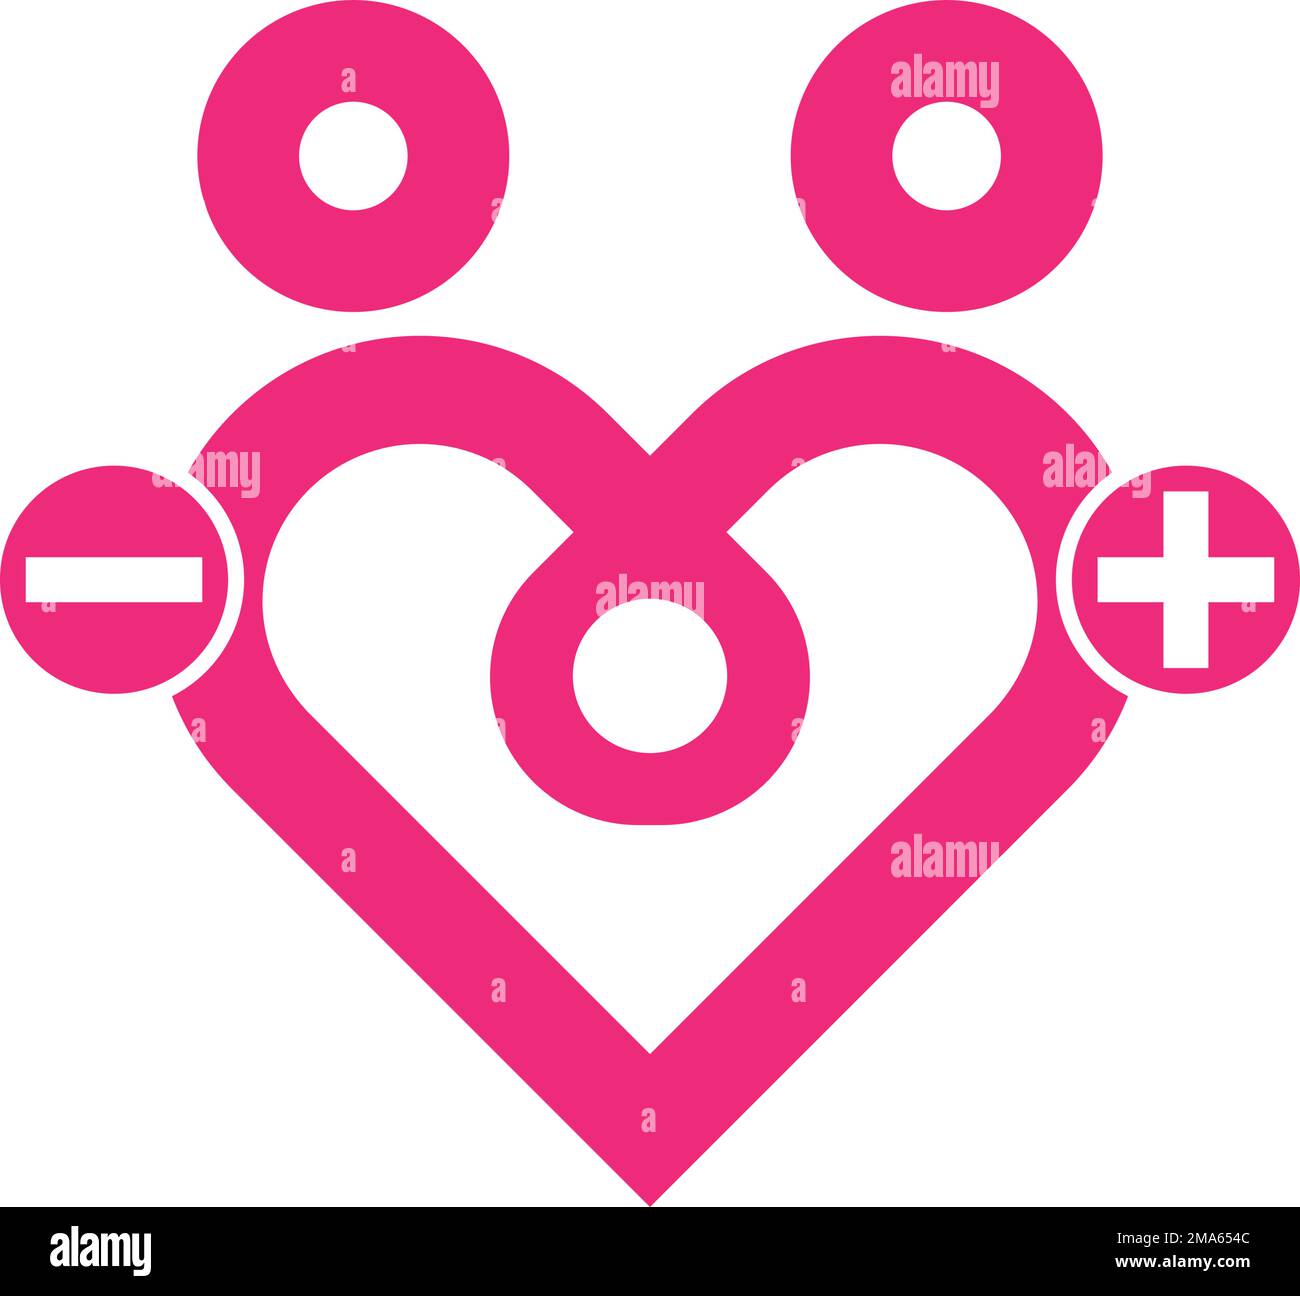 love or affection logo vector illustration template design Stock Vector